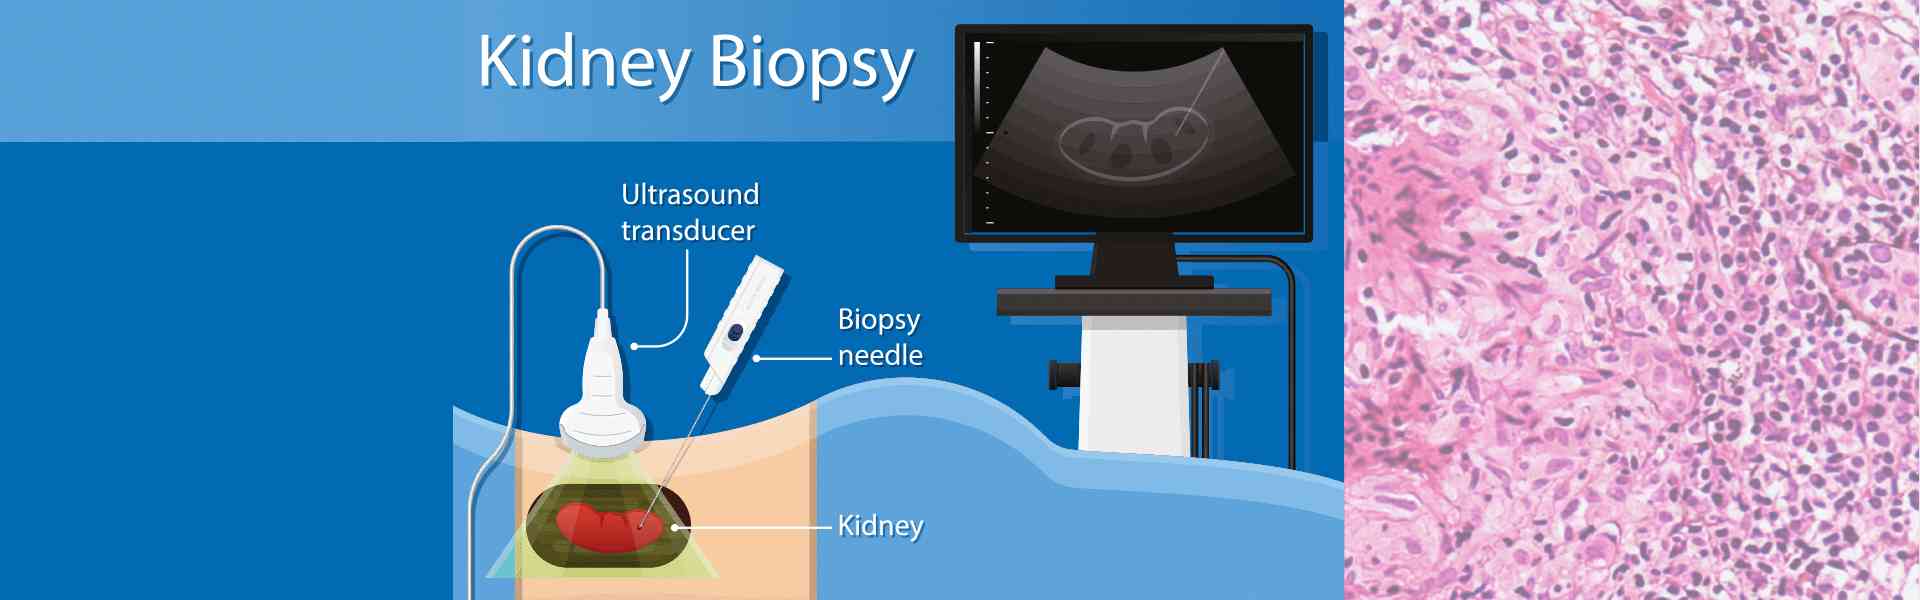 Kidney Biopsy Treatment in Varthur Road, Bangalore